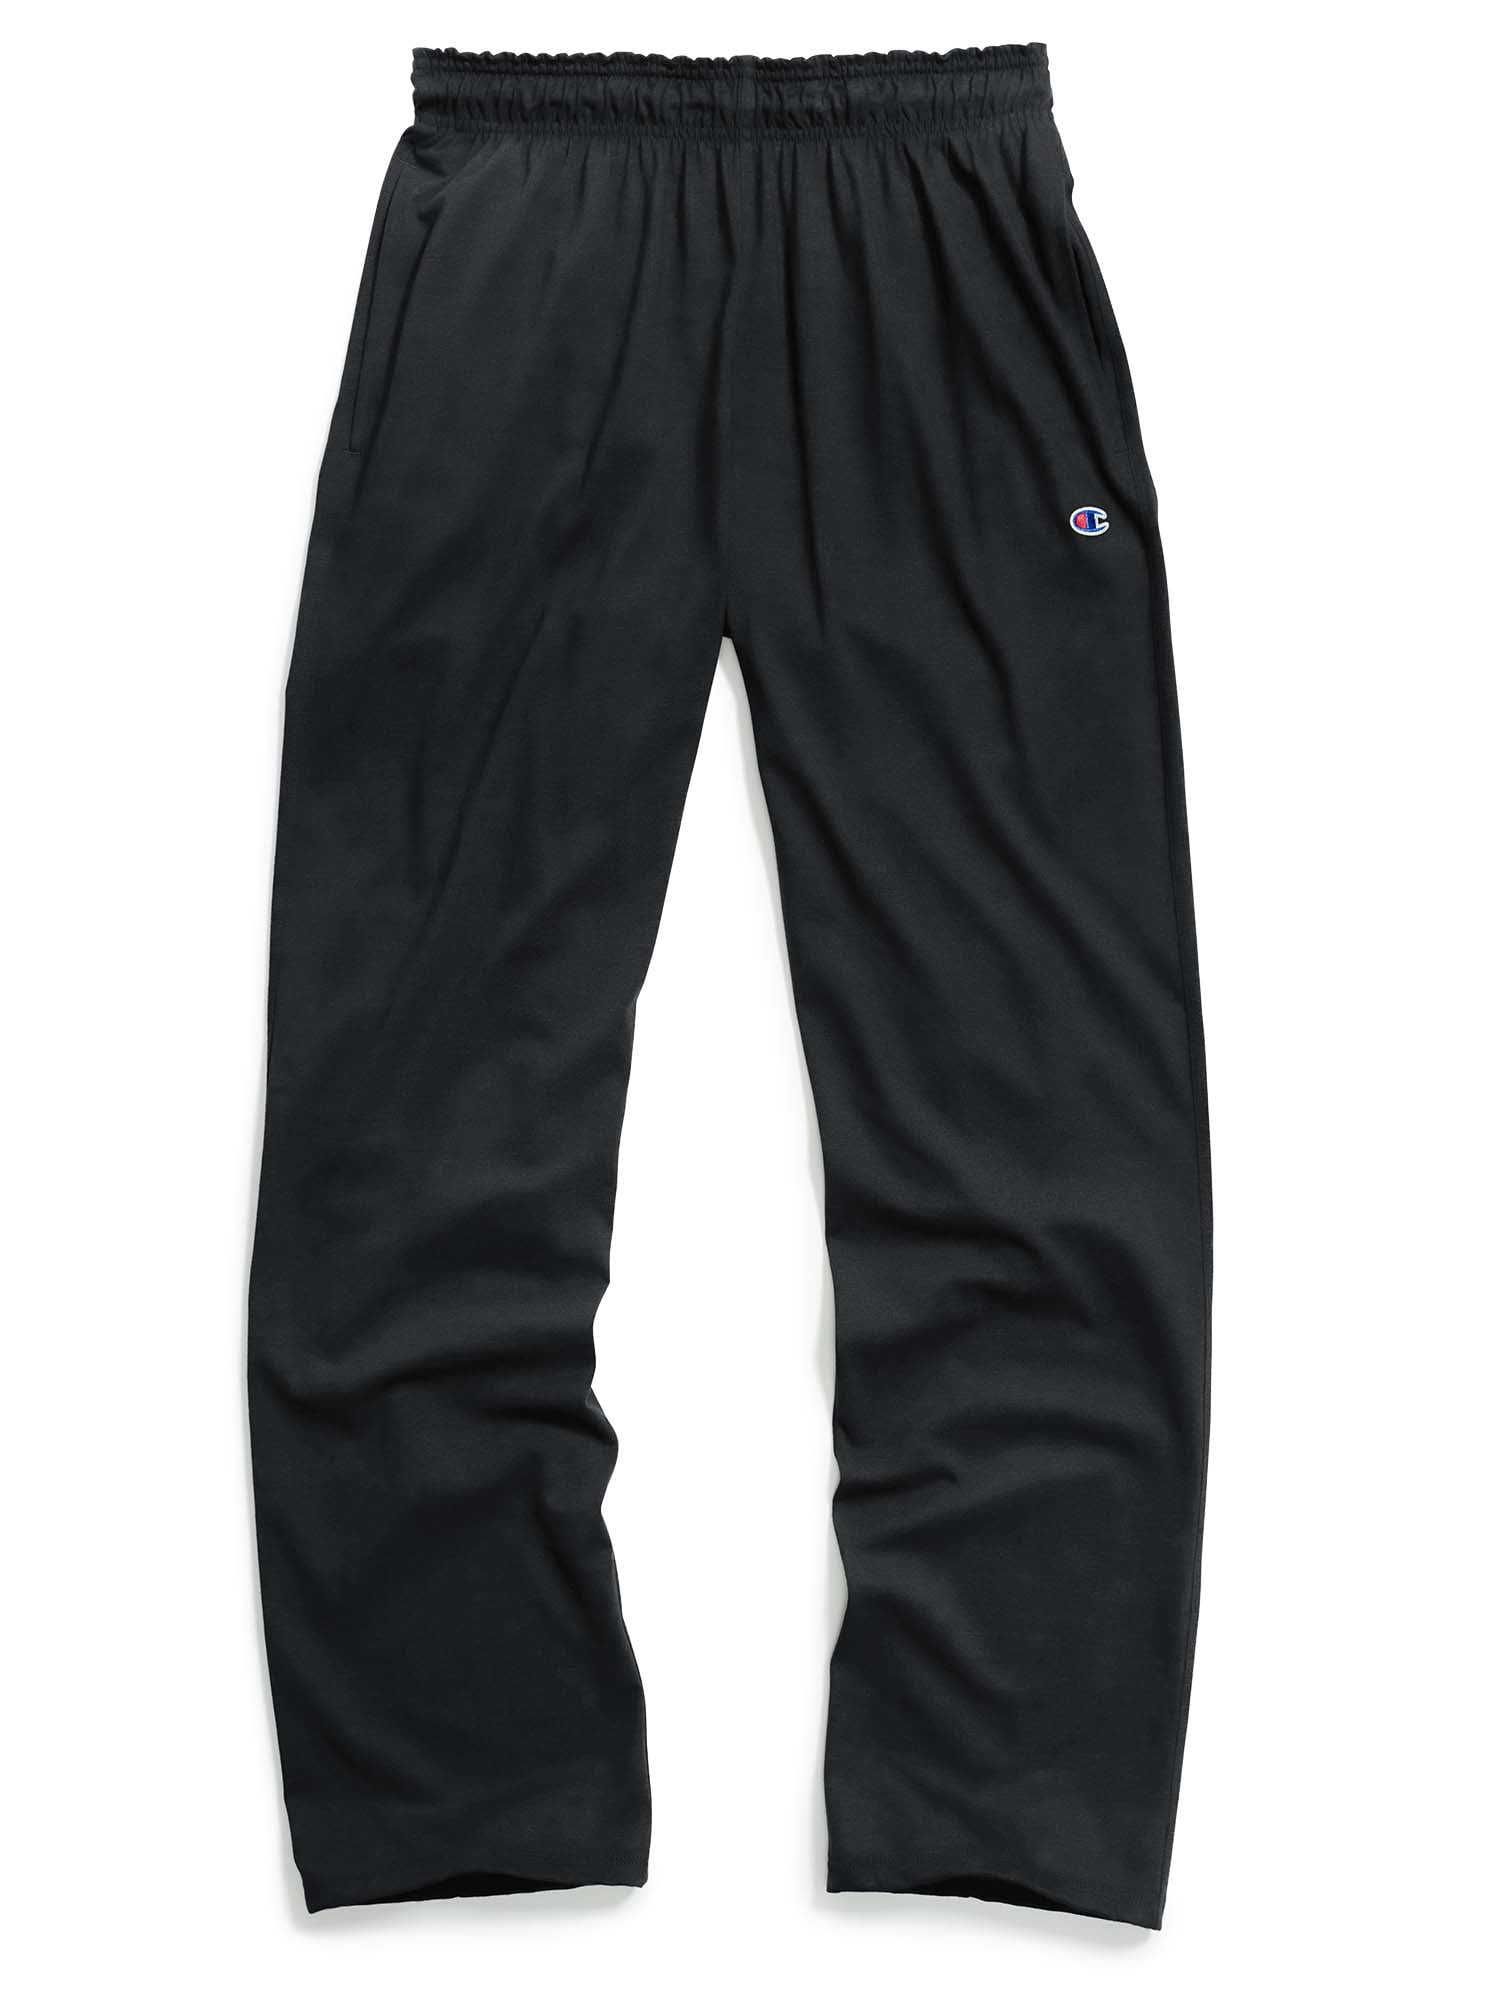 Champion Men's and Big Men's Open Bottom Cotton Jersey Pants Active Up to 4XL - Walmart.com